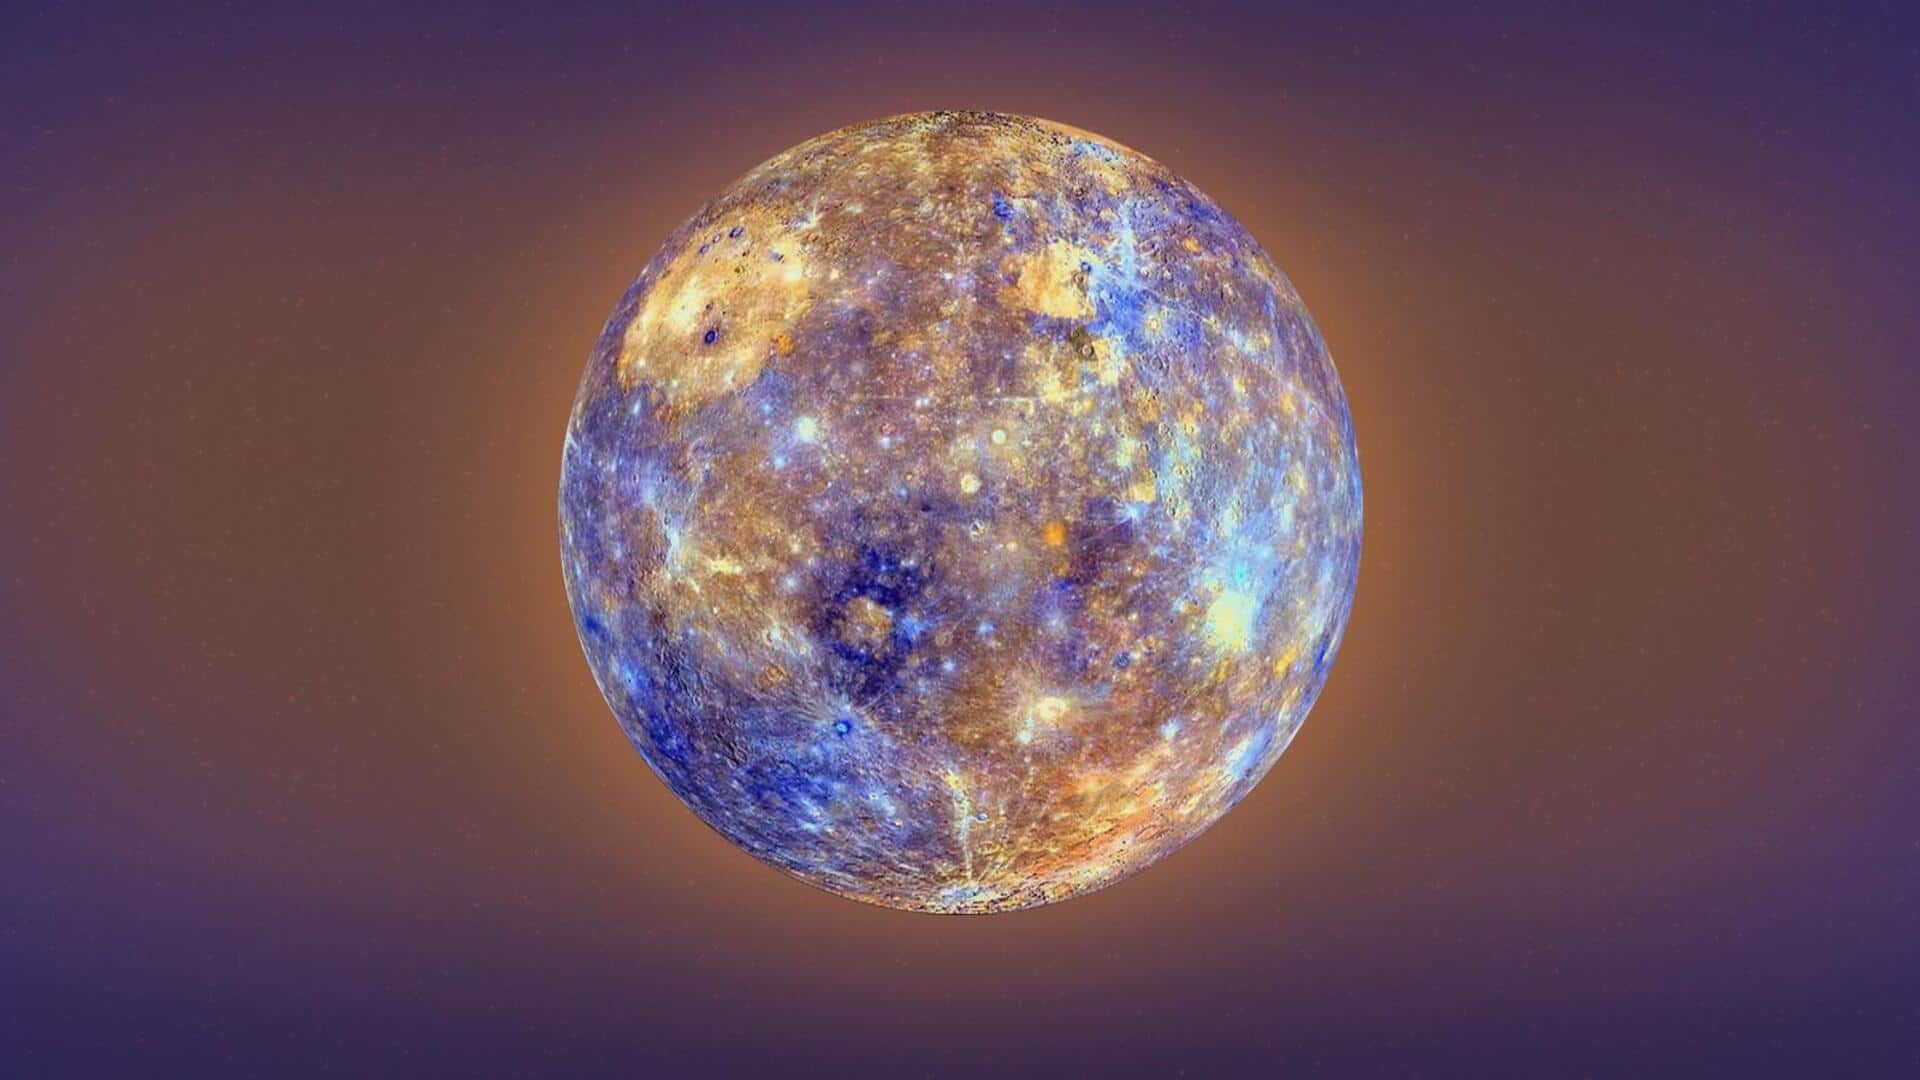 Mercury's mesmerizing image, clicked by NASA, captivates millions